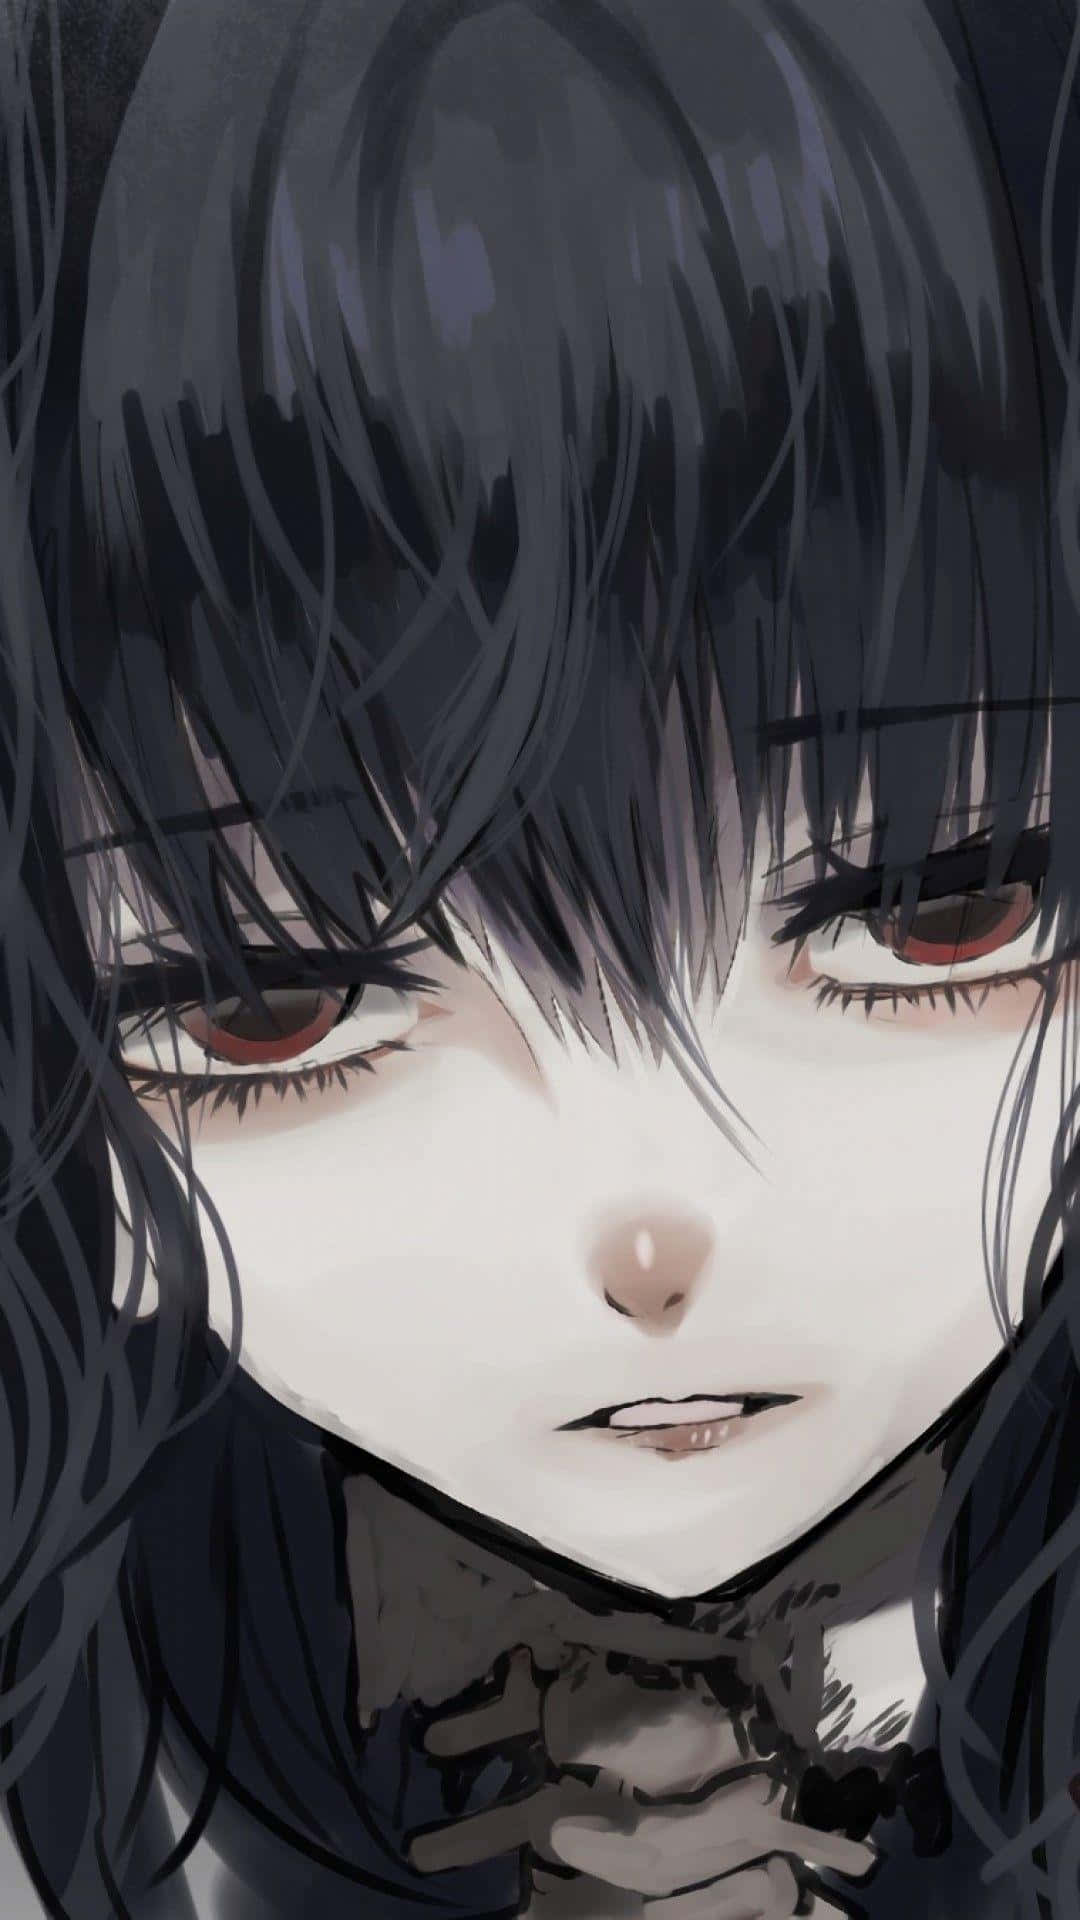 Sad Depressing Anime Gothic Emo Girl Wallpaper